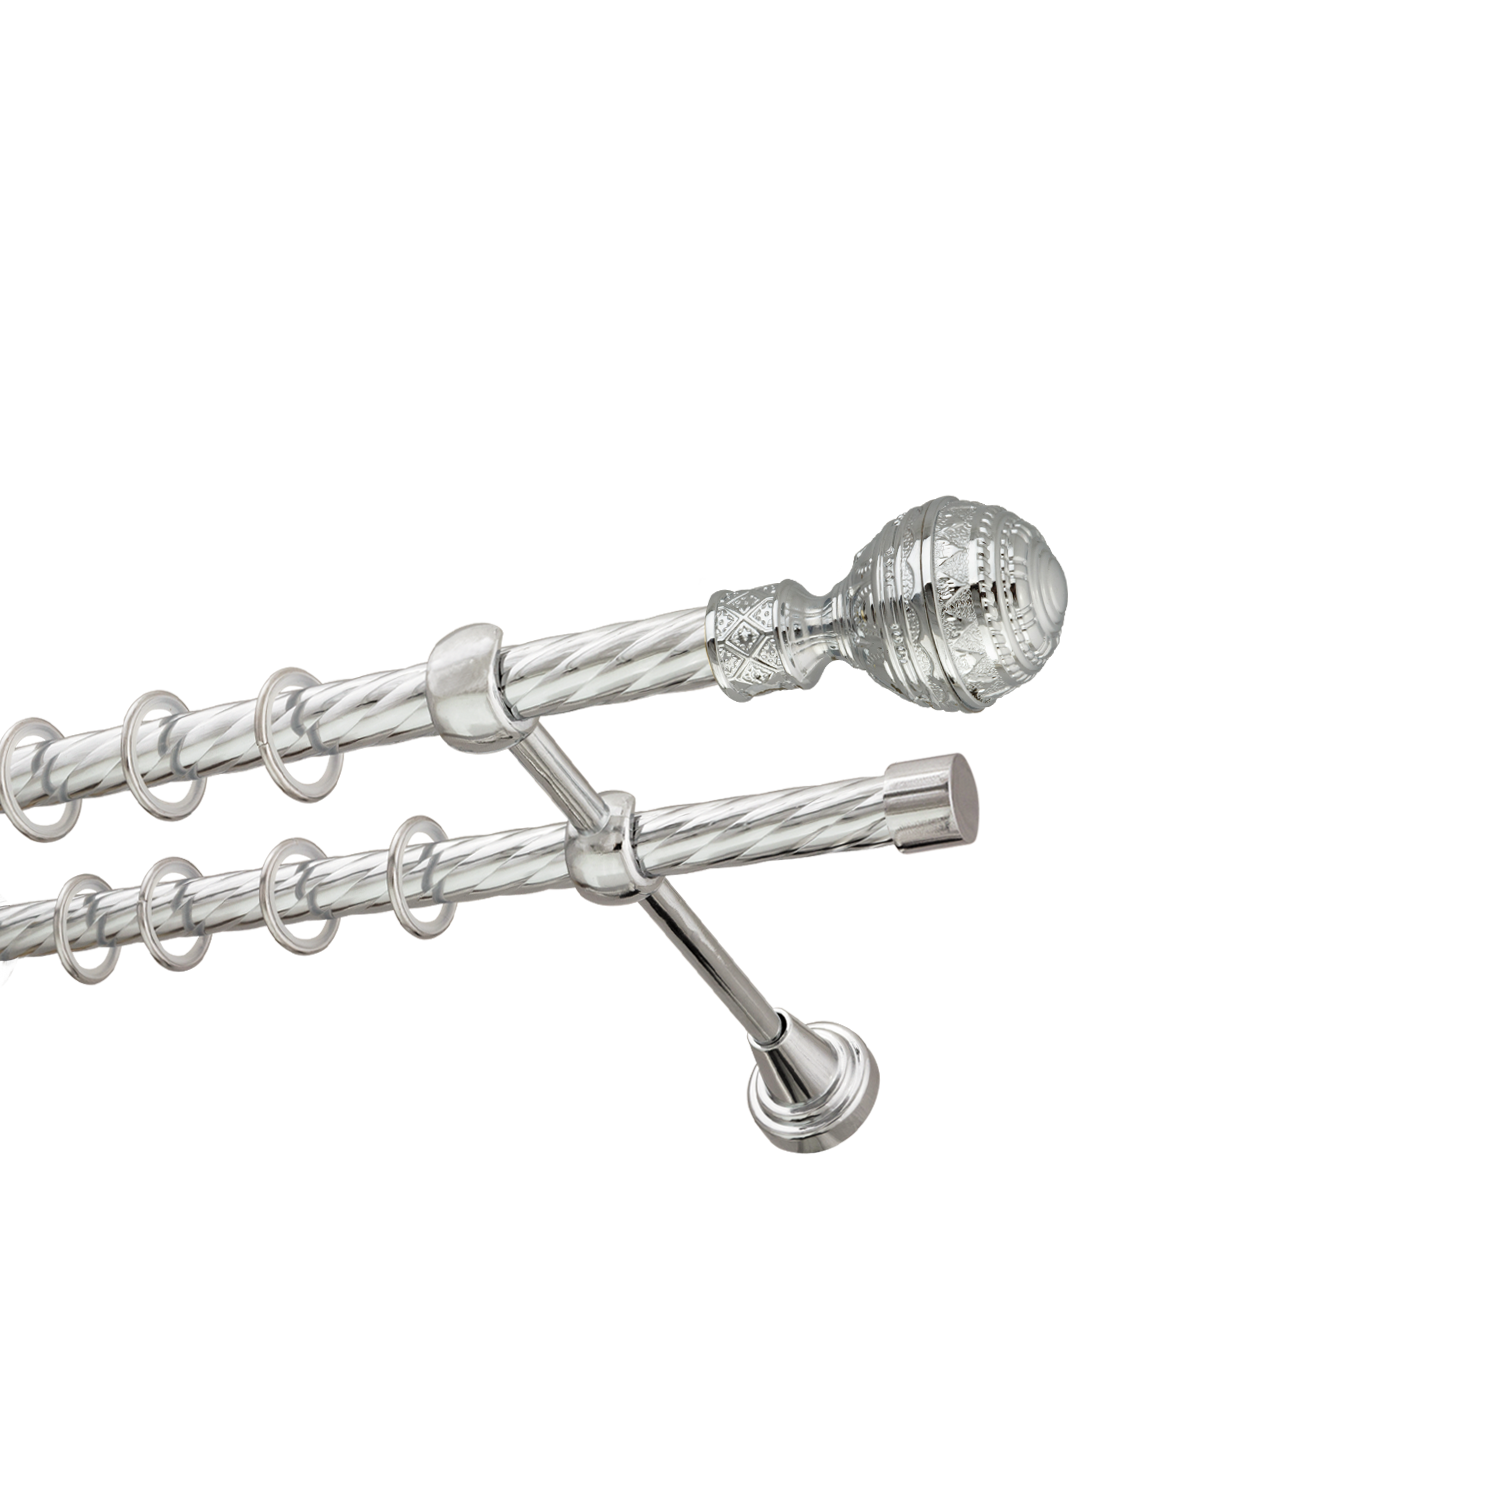 Металлический карниз для штор Роял, двухрядный 16/16 мм, серебро, витая штанга, длина 300 см - фото Wikidecor.ru